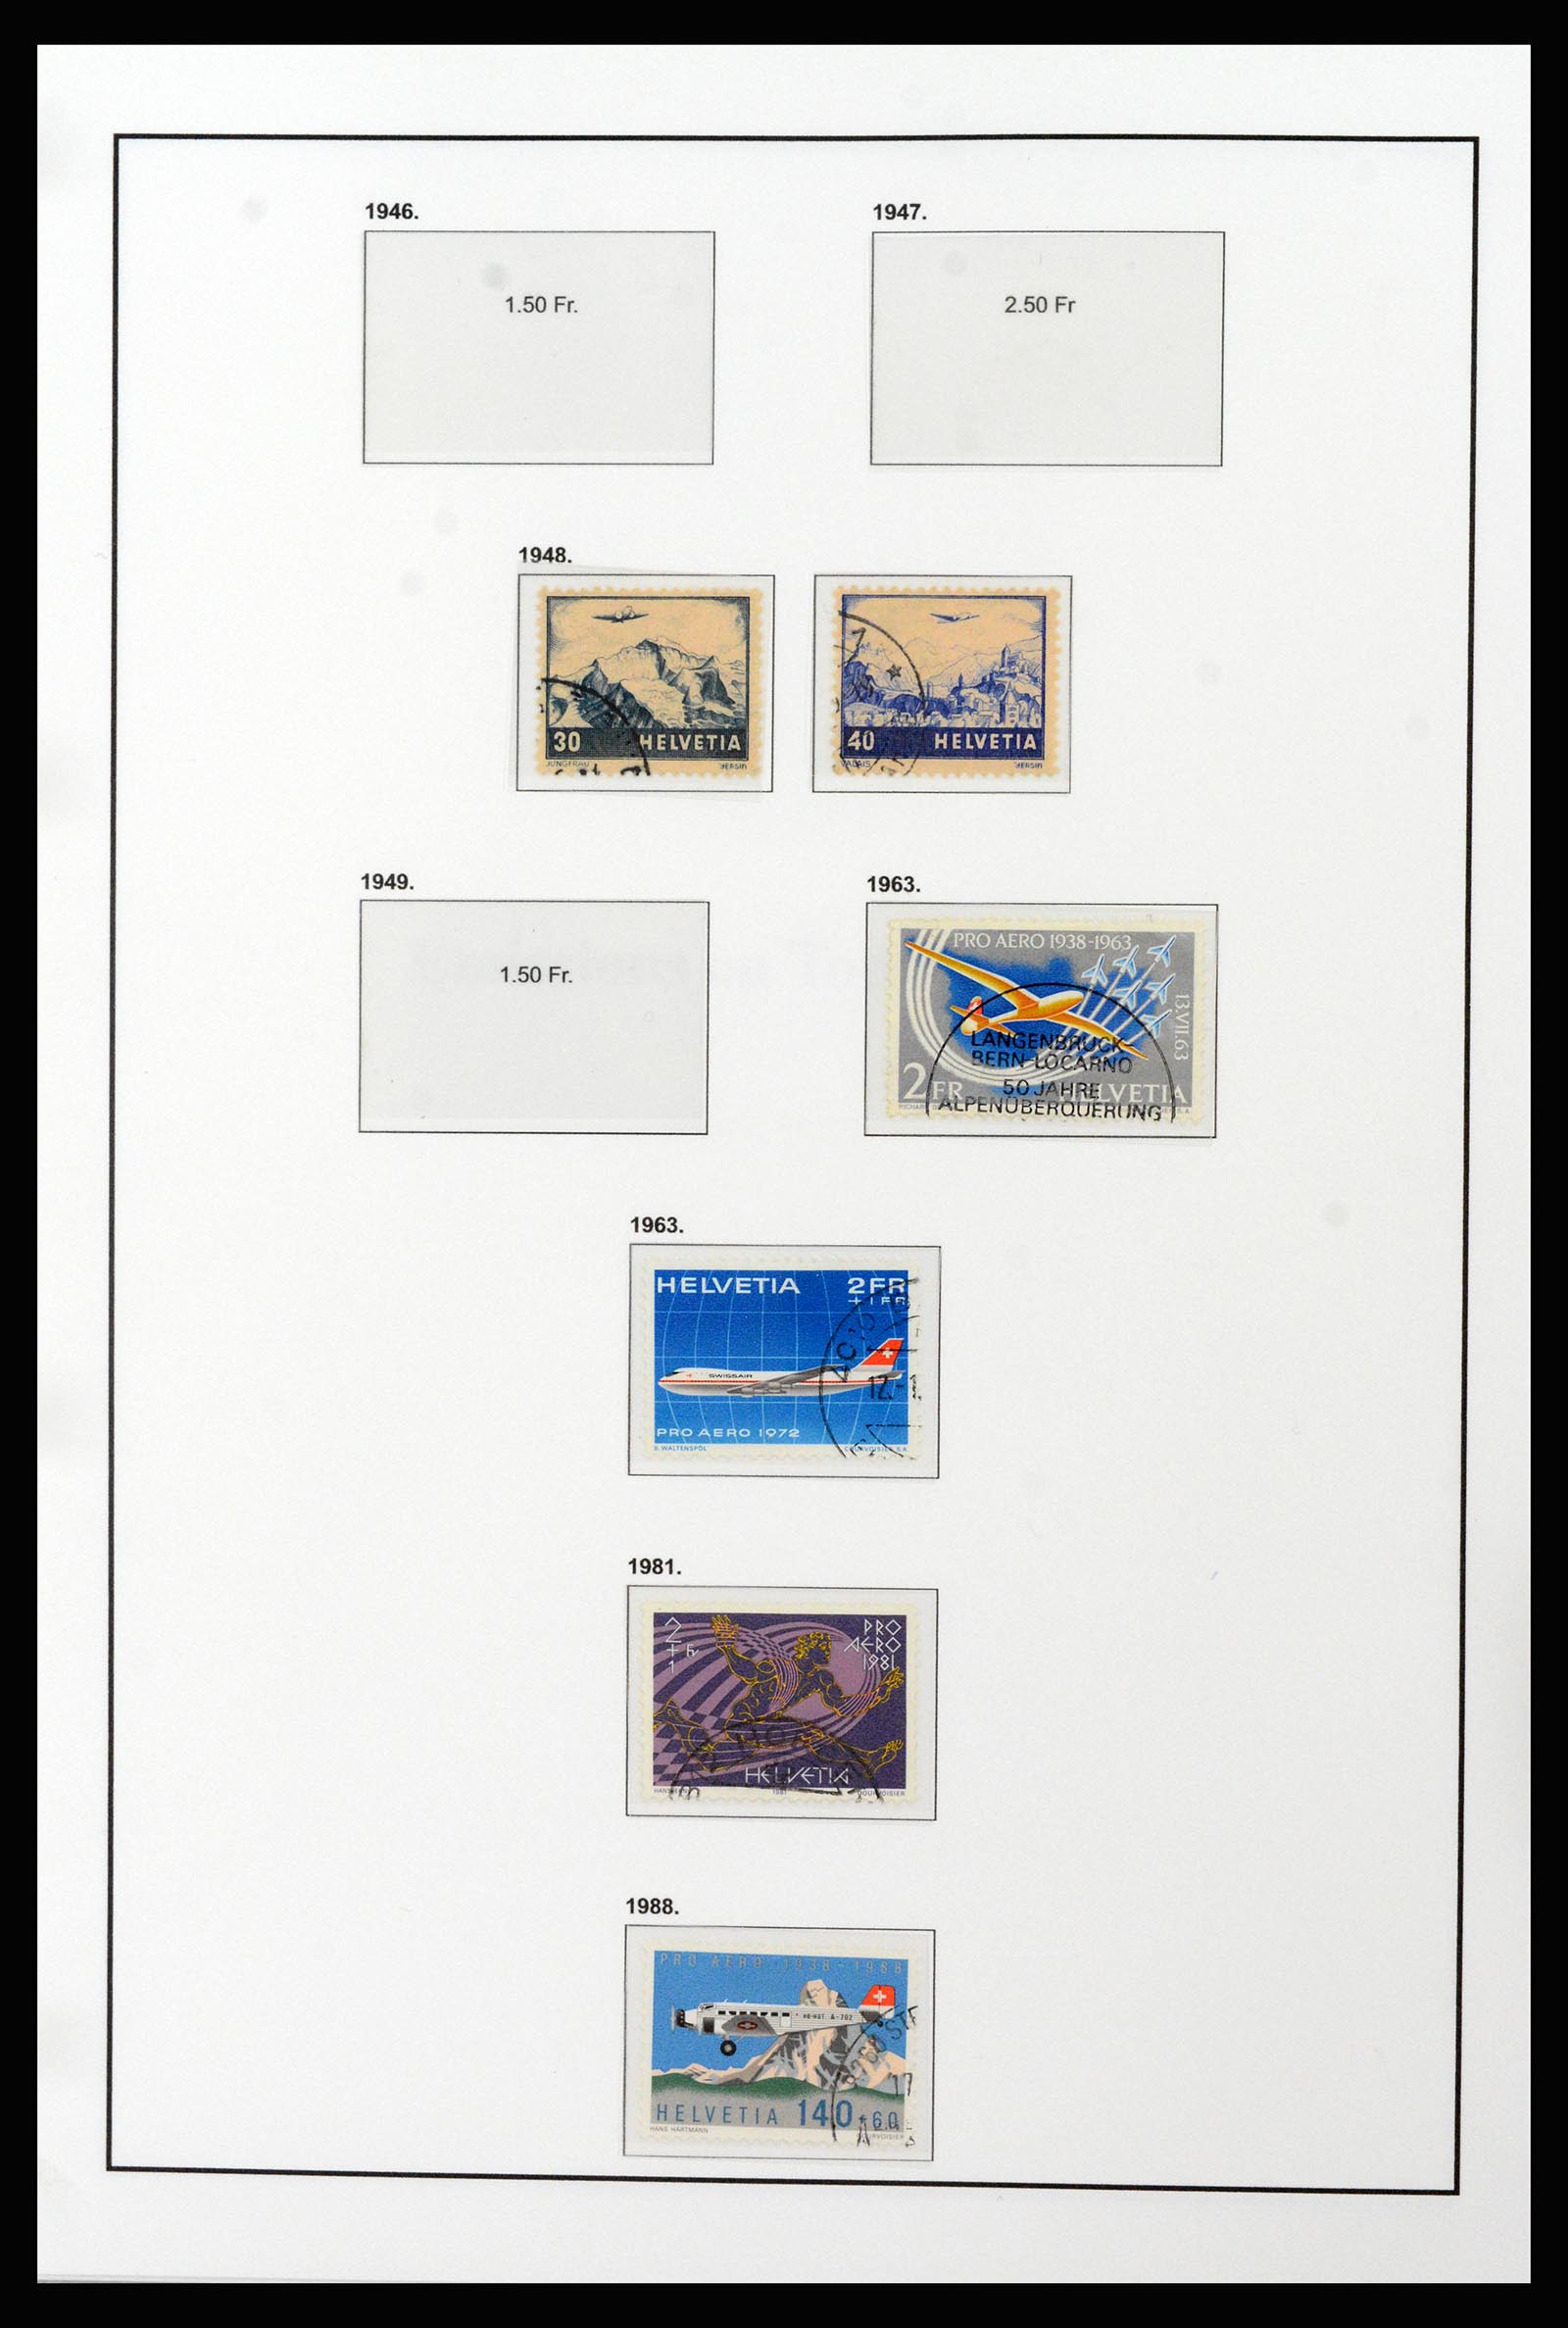 37225 098 - Stamp collection 37225 Switzerland 1854-2020.